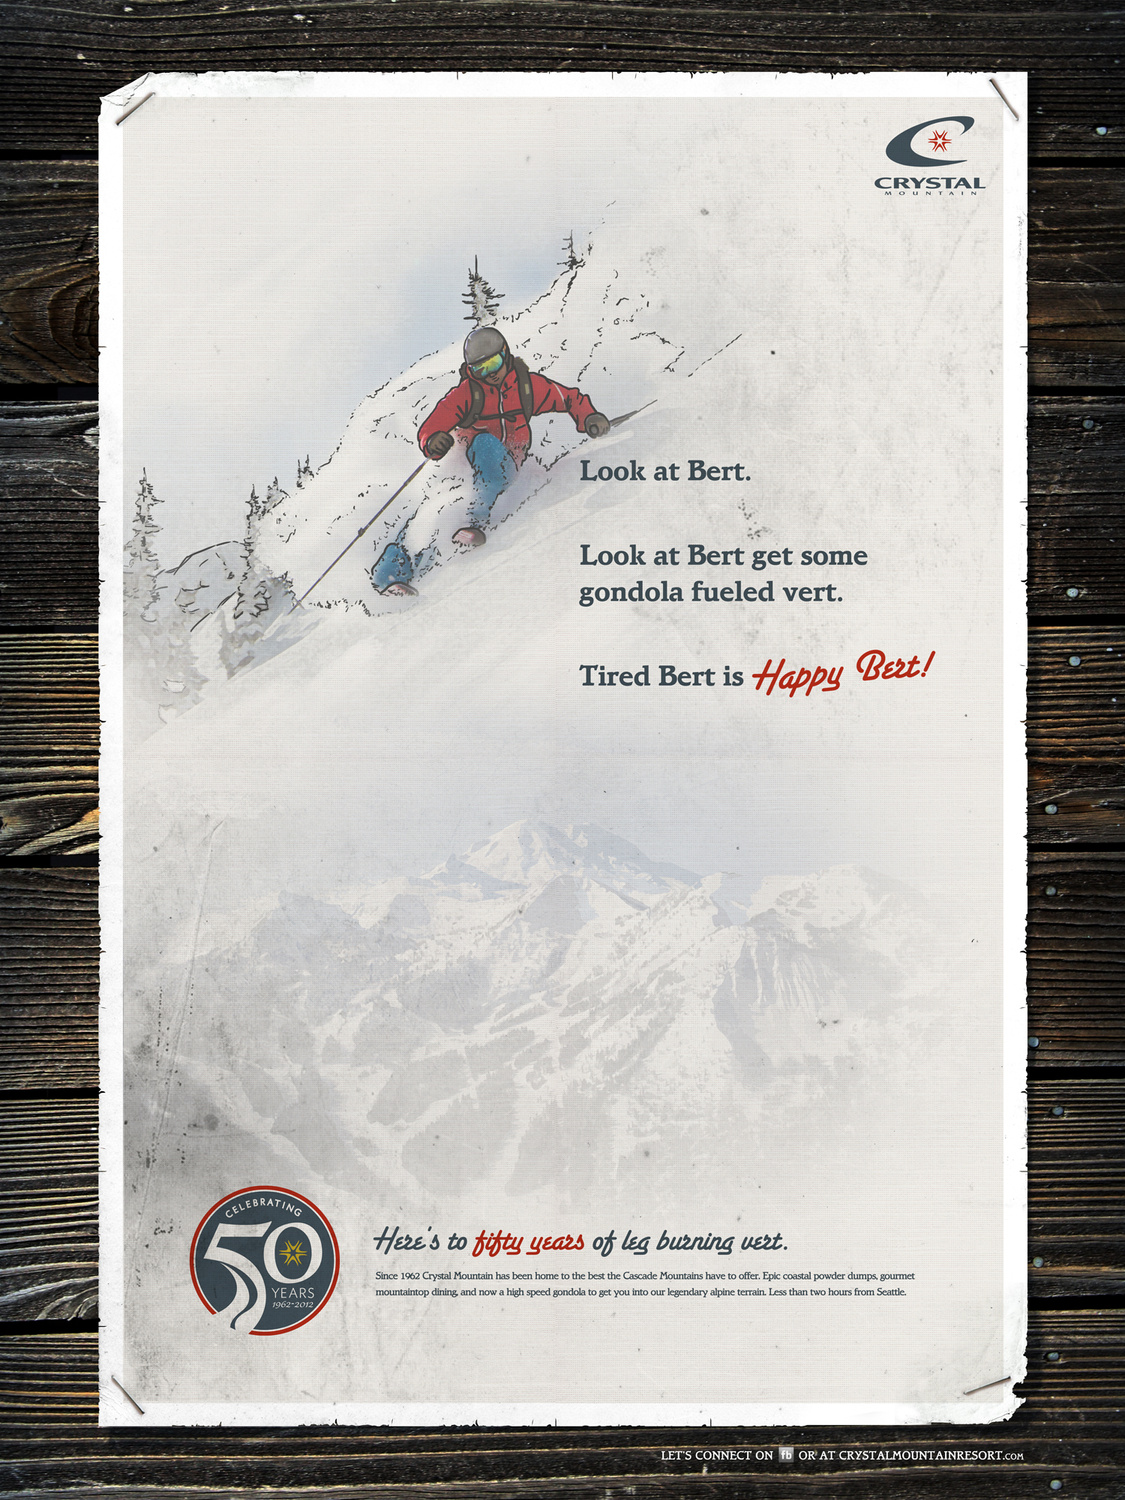 Crystal Mountain Print Advertising 03.jpg